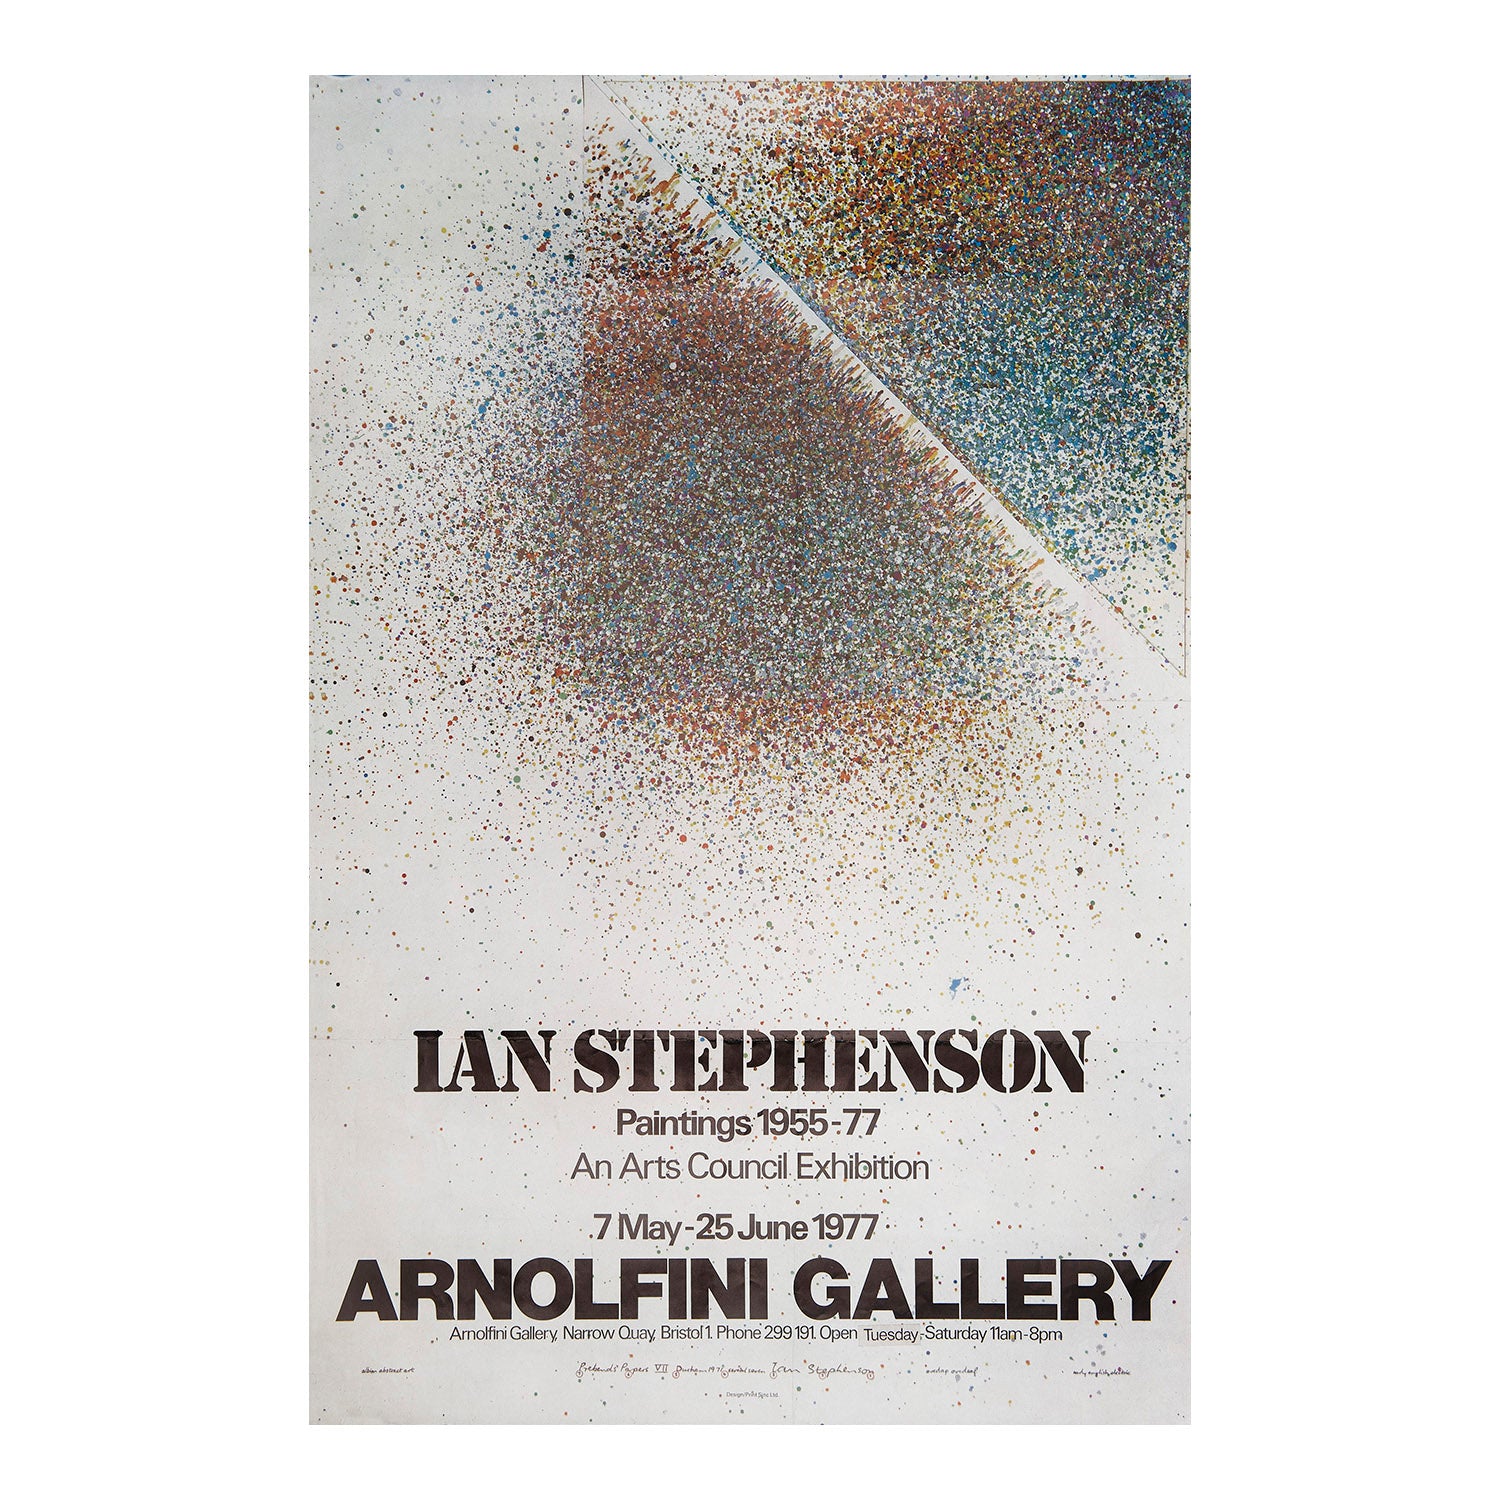 Ian Stephenson, Paintings 1955-77 (exhibition)